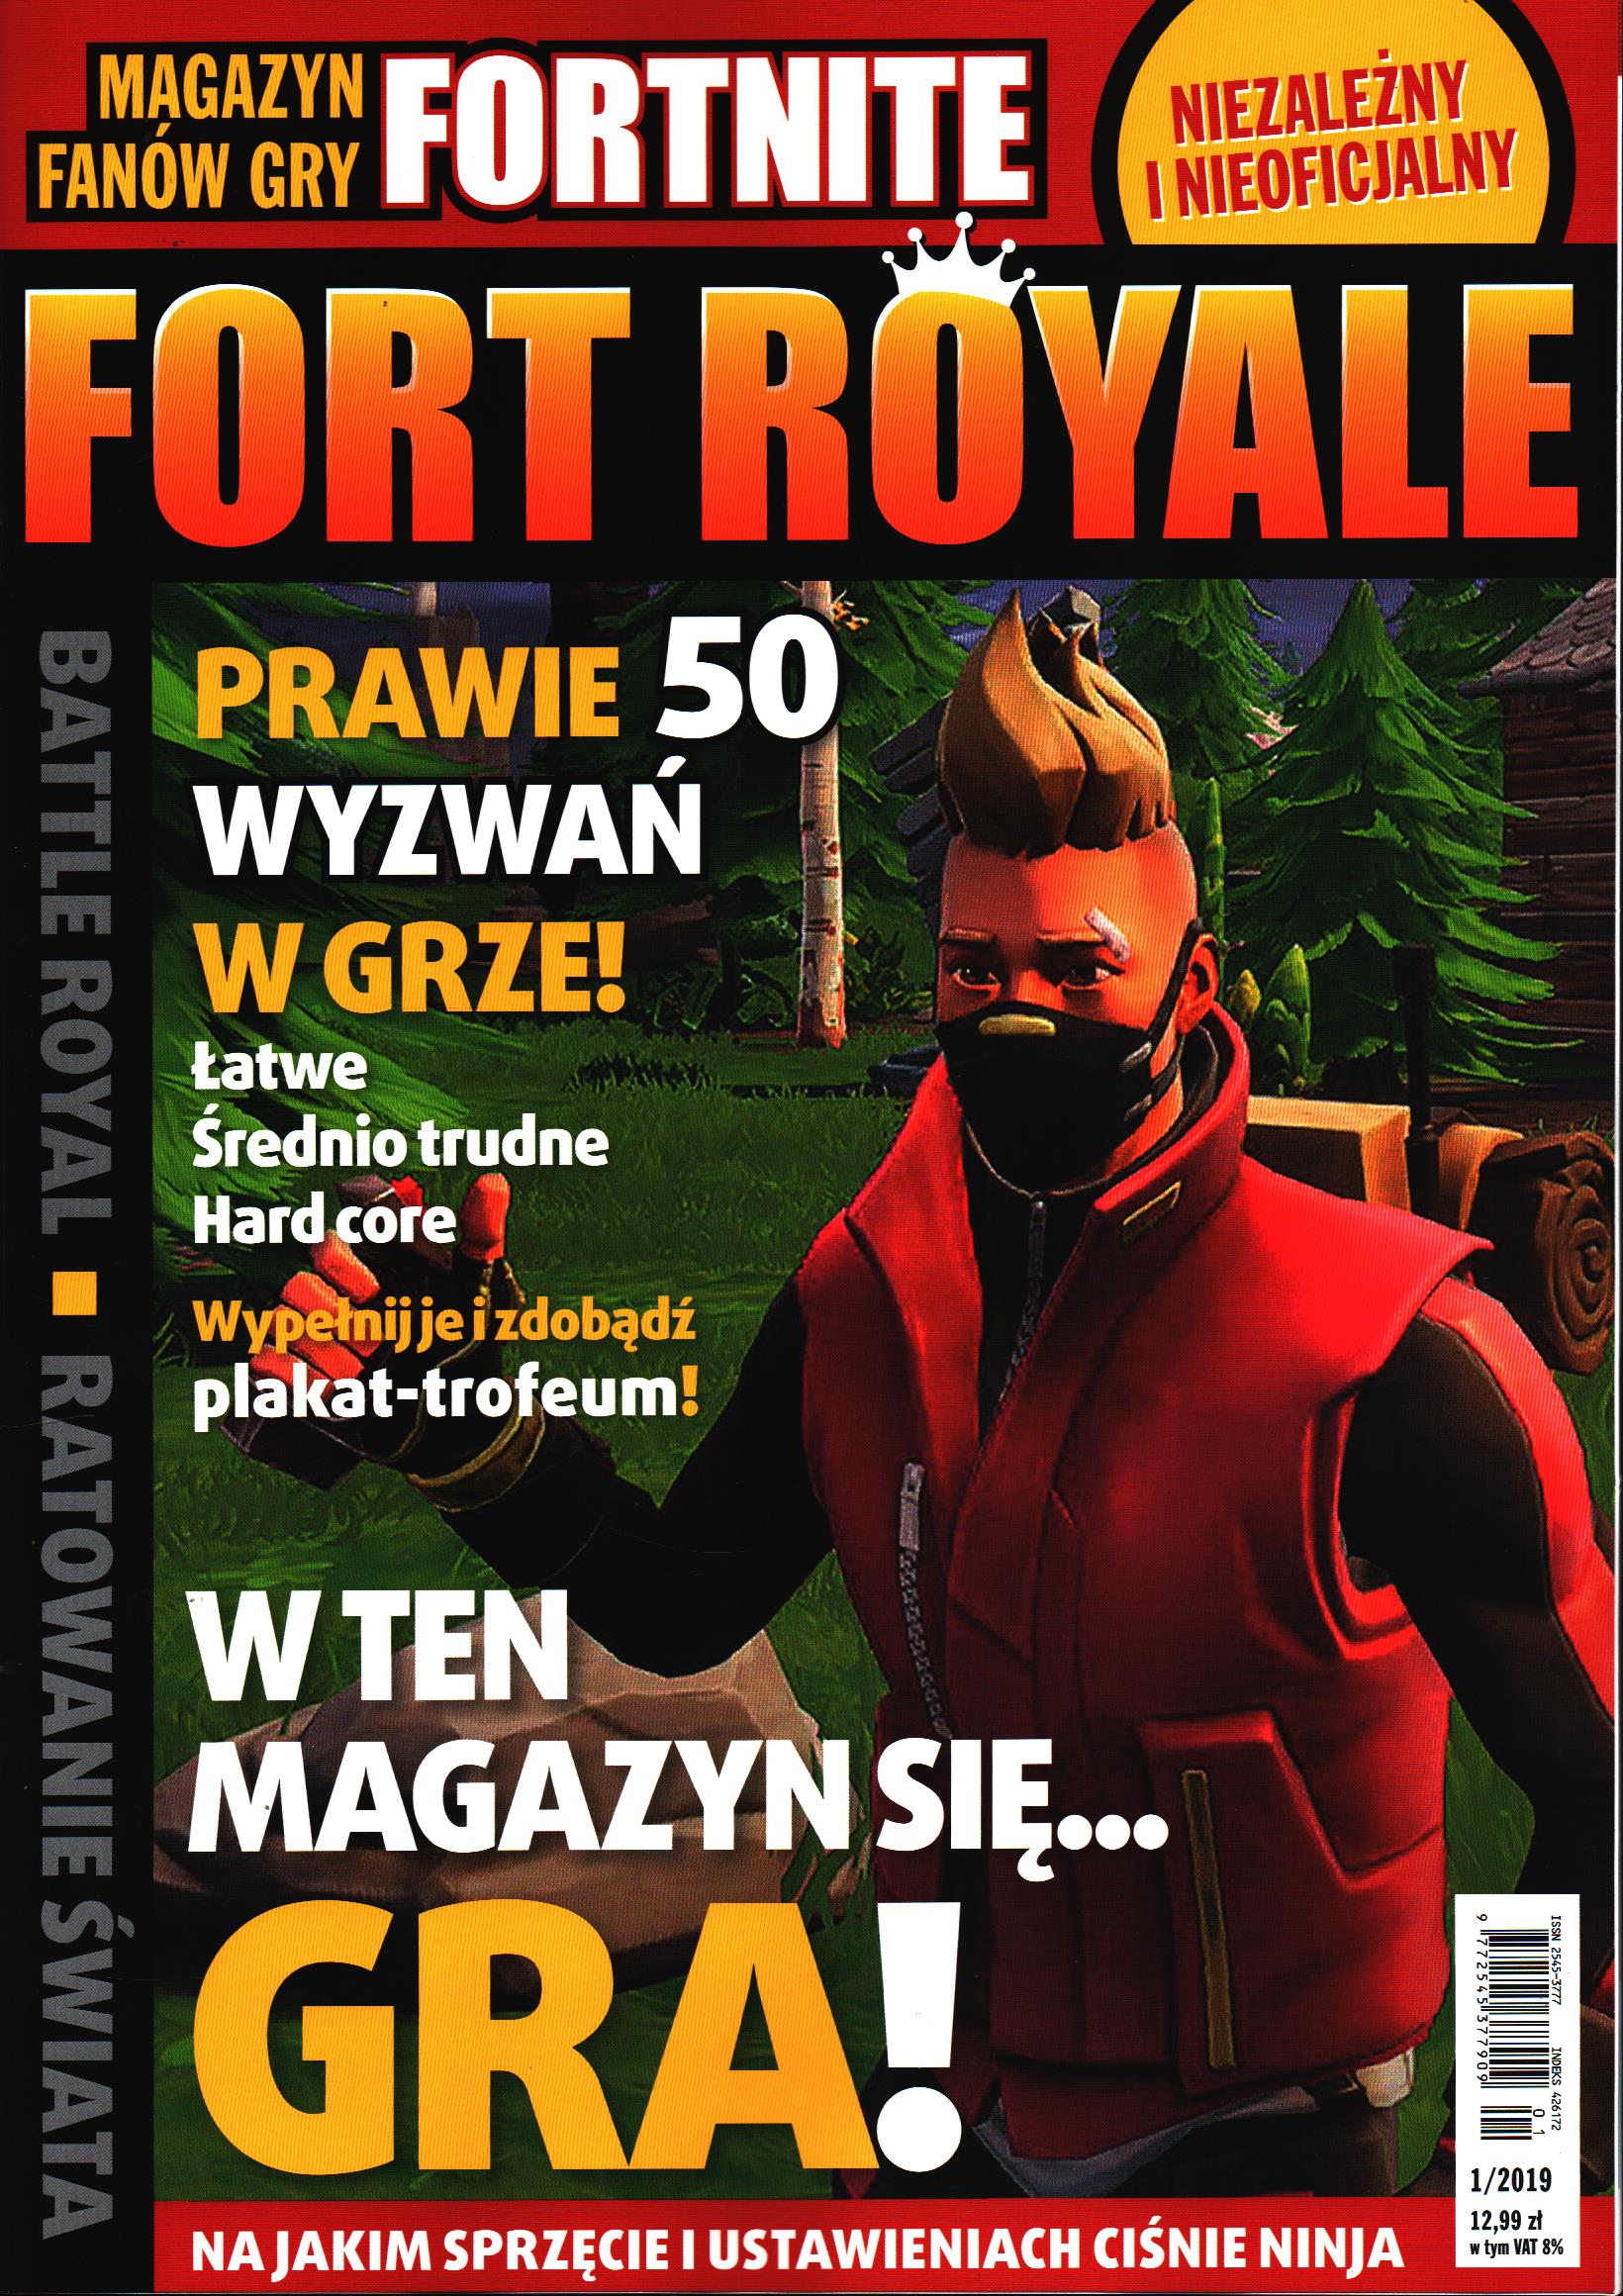 1 fort royale magazyn fanow gry fortnite - fortnite kiosk